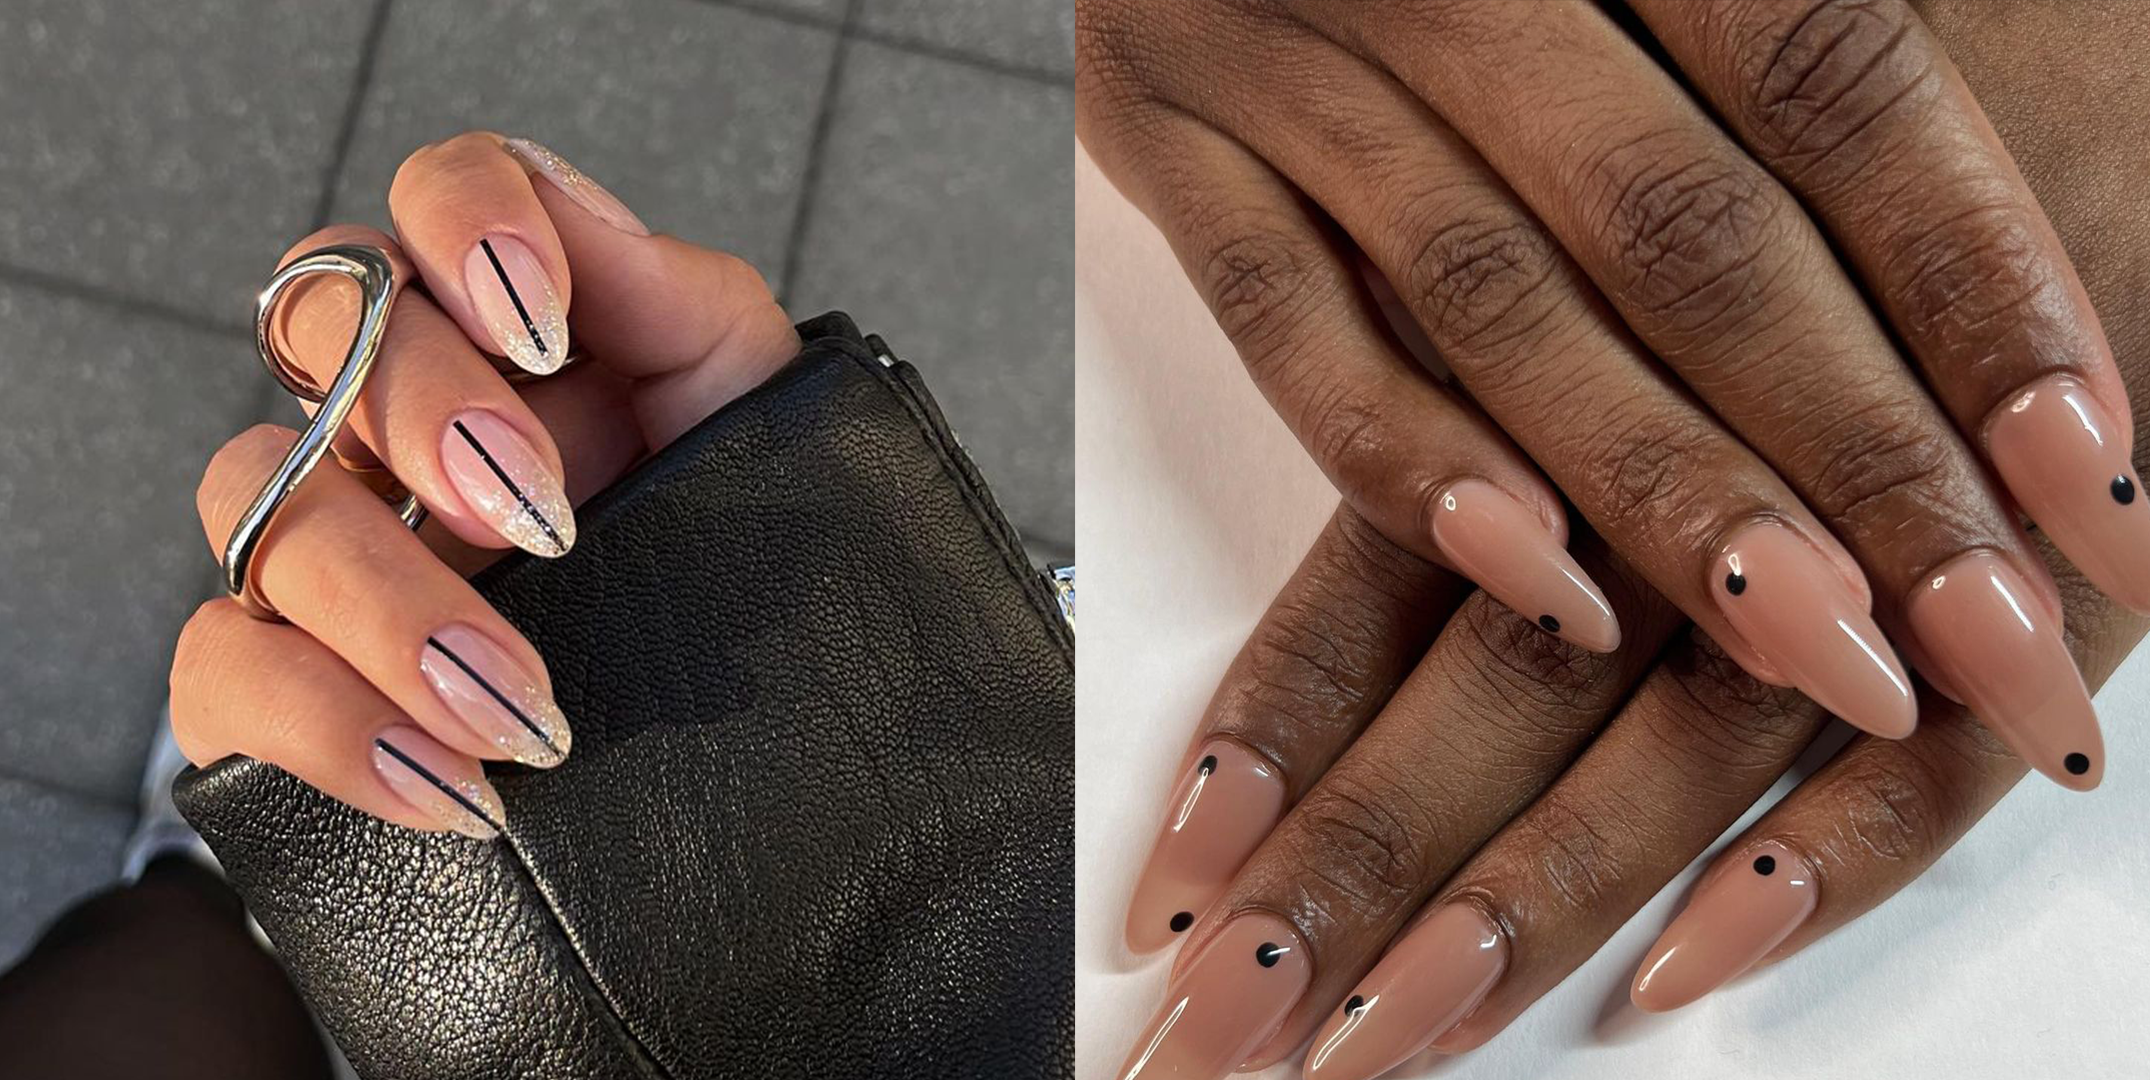 nail art - nail designs, ideas, looks & inspiration - essie